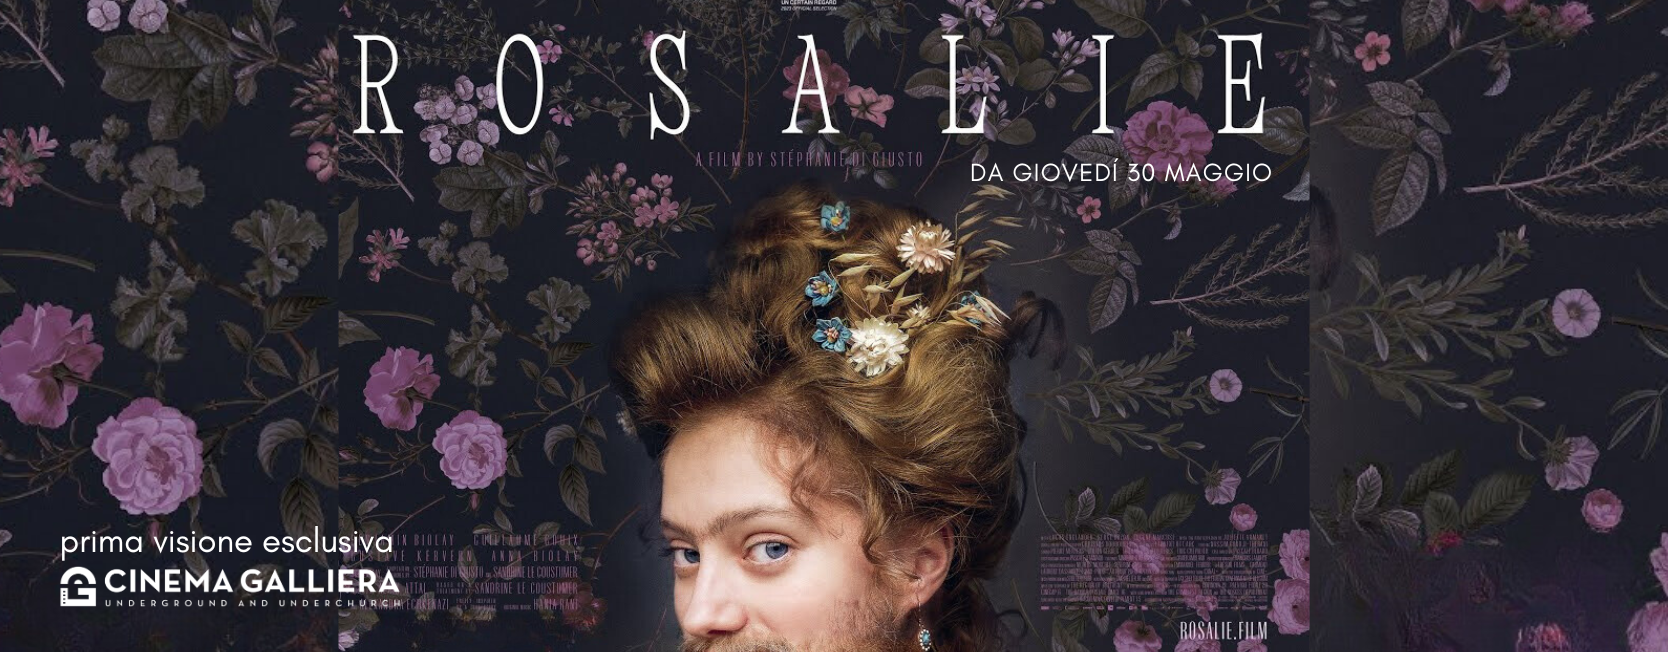 ROSALIE.COVER FACEBOOK